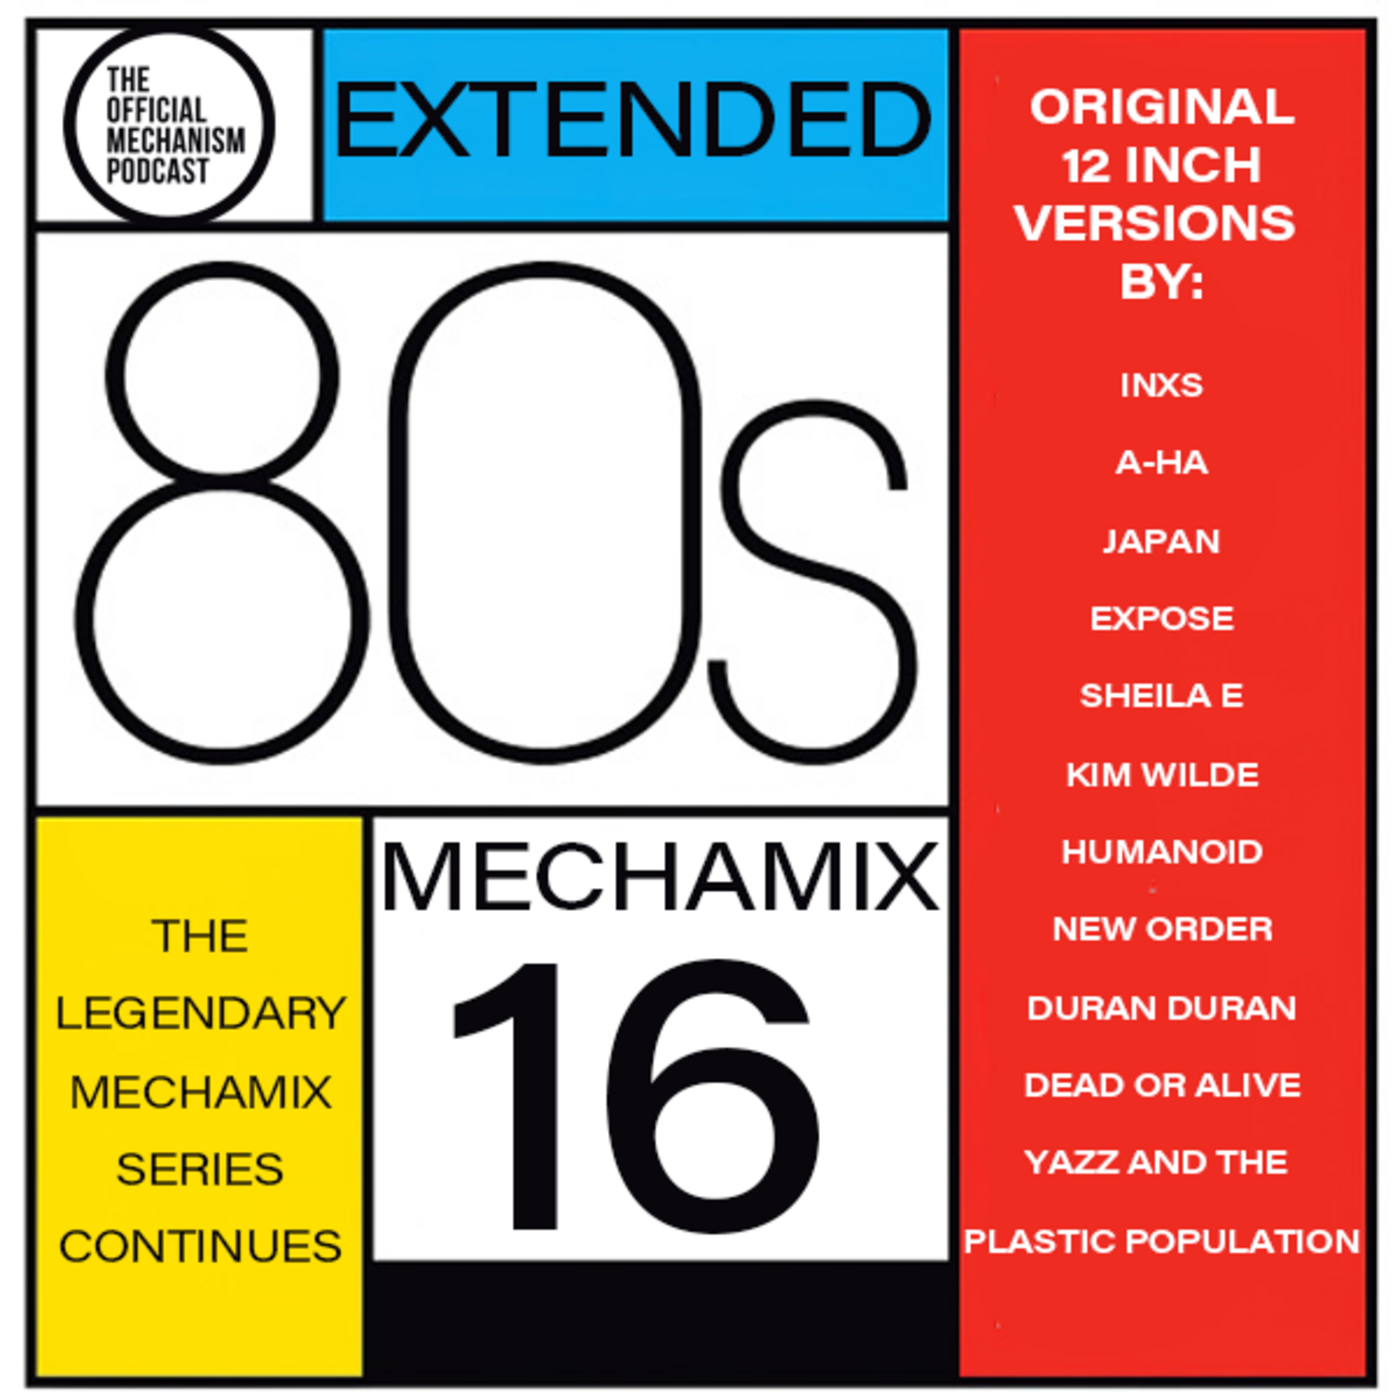 Episode 1163: EXTENDED 80’s MECHAMIX 16